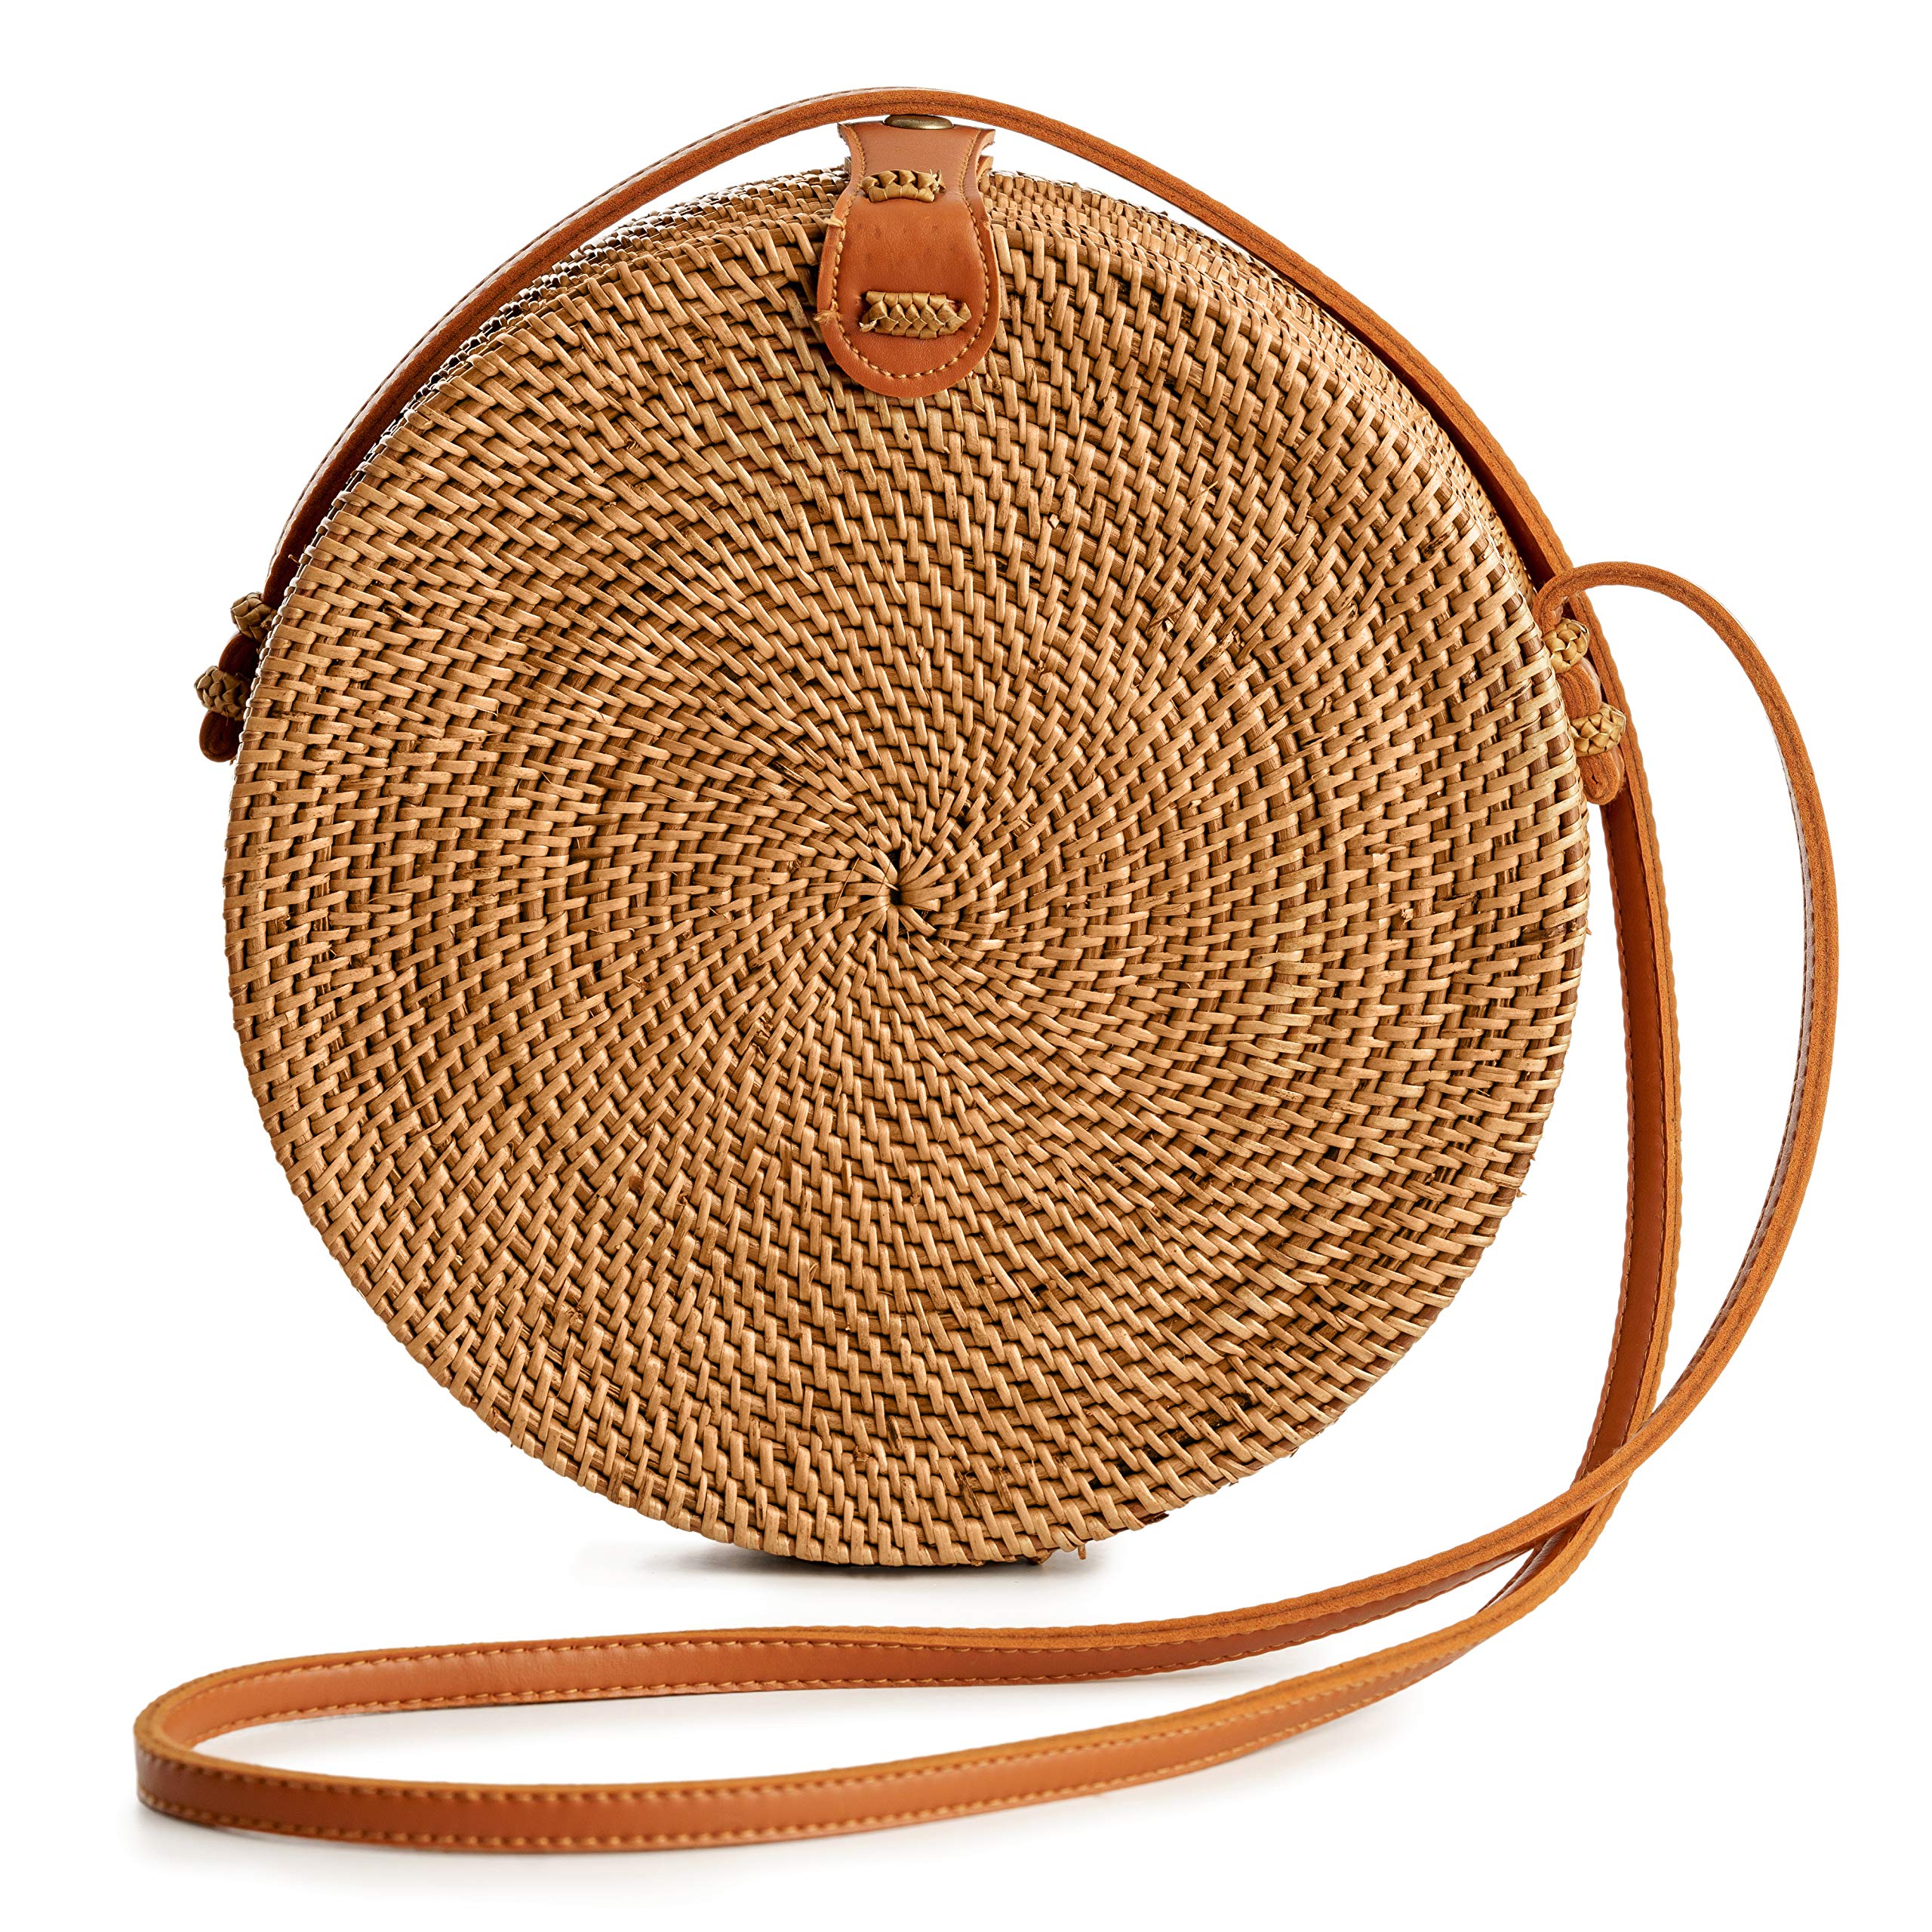 Round Rattan Bag with Handle Wicker Bags Premium Weaving